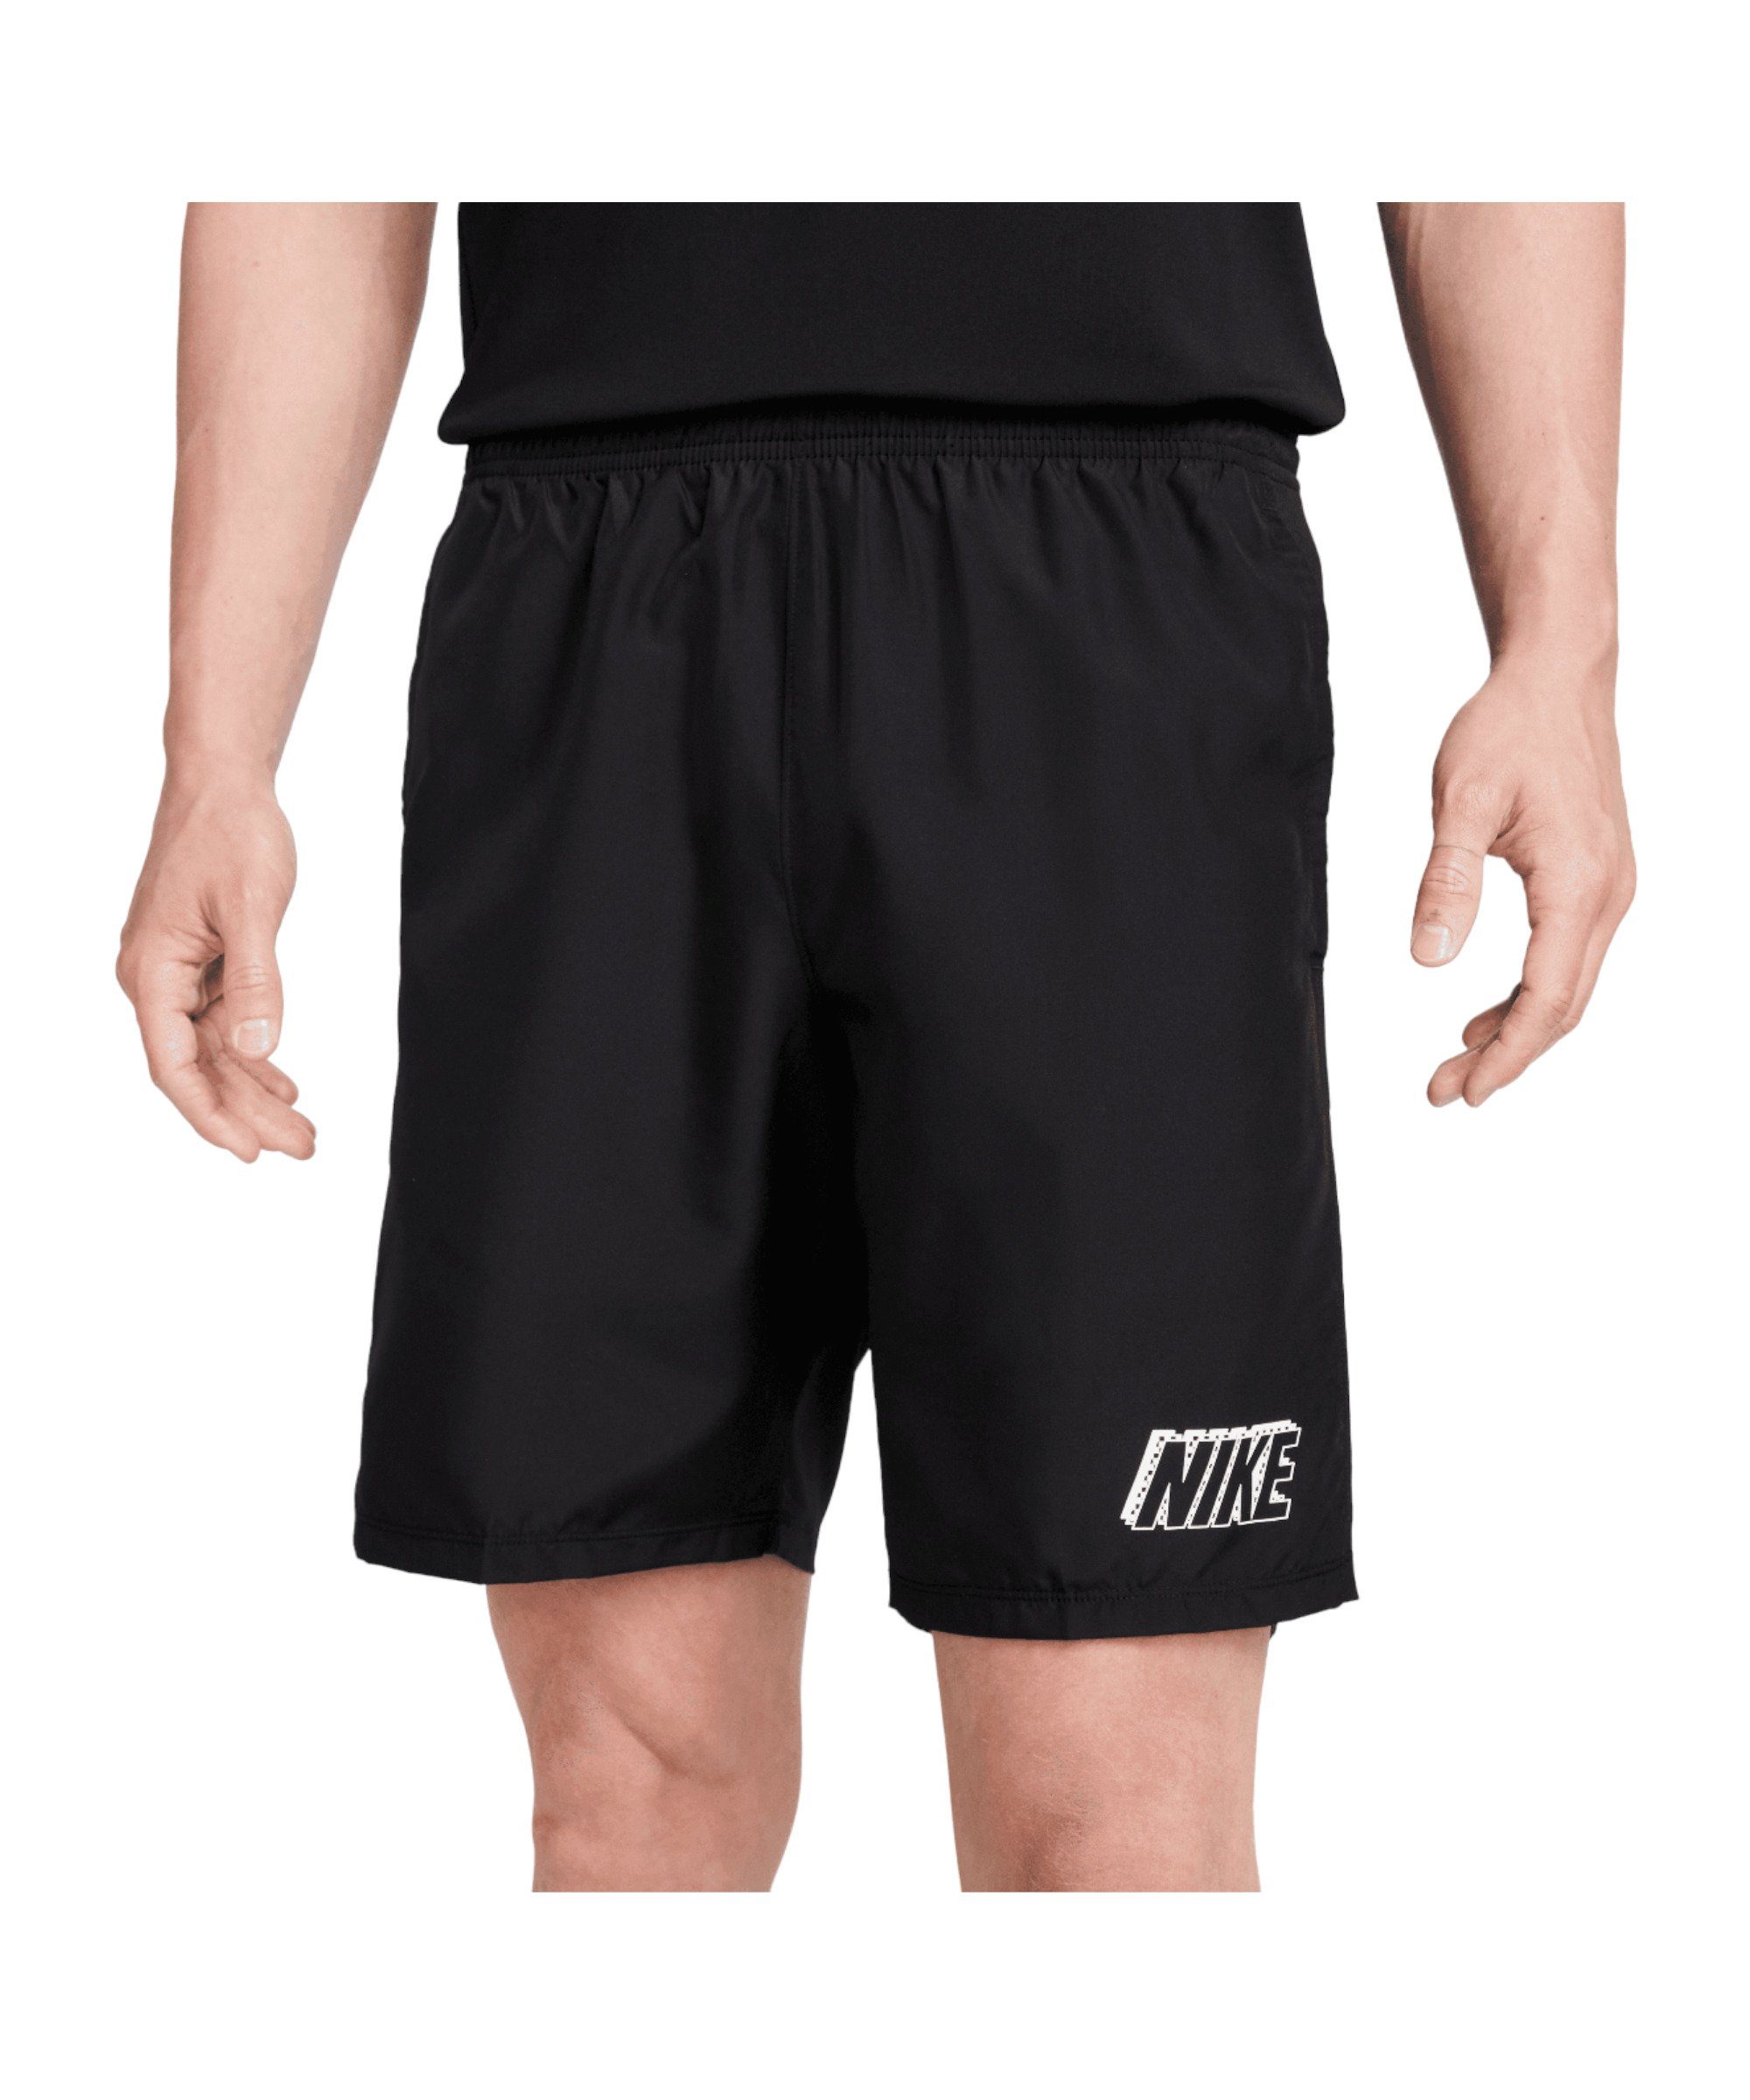 Nike Sporthose Academy Short schwarzschwarzweiss